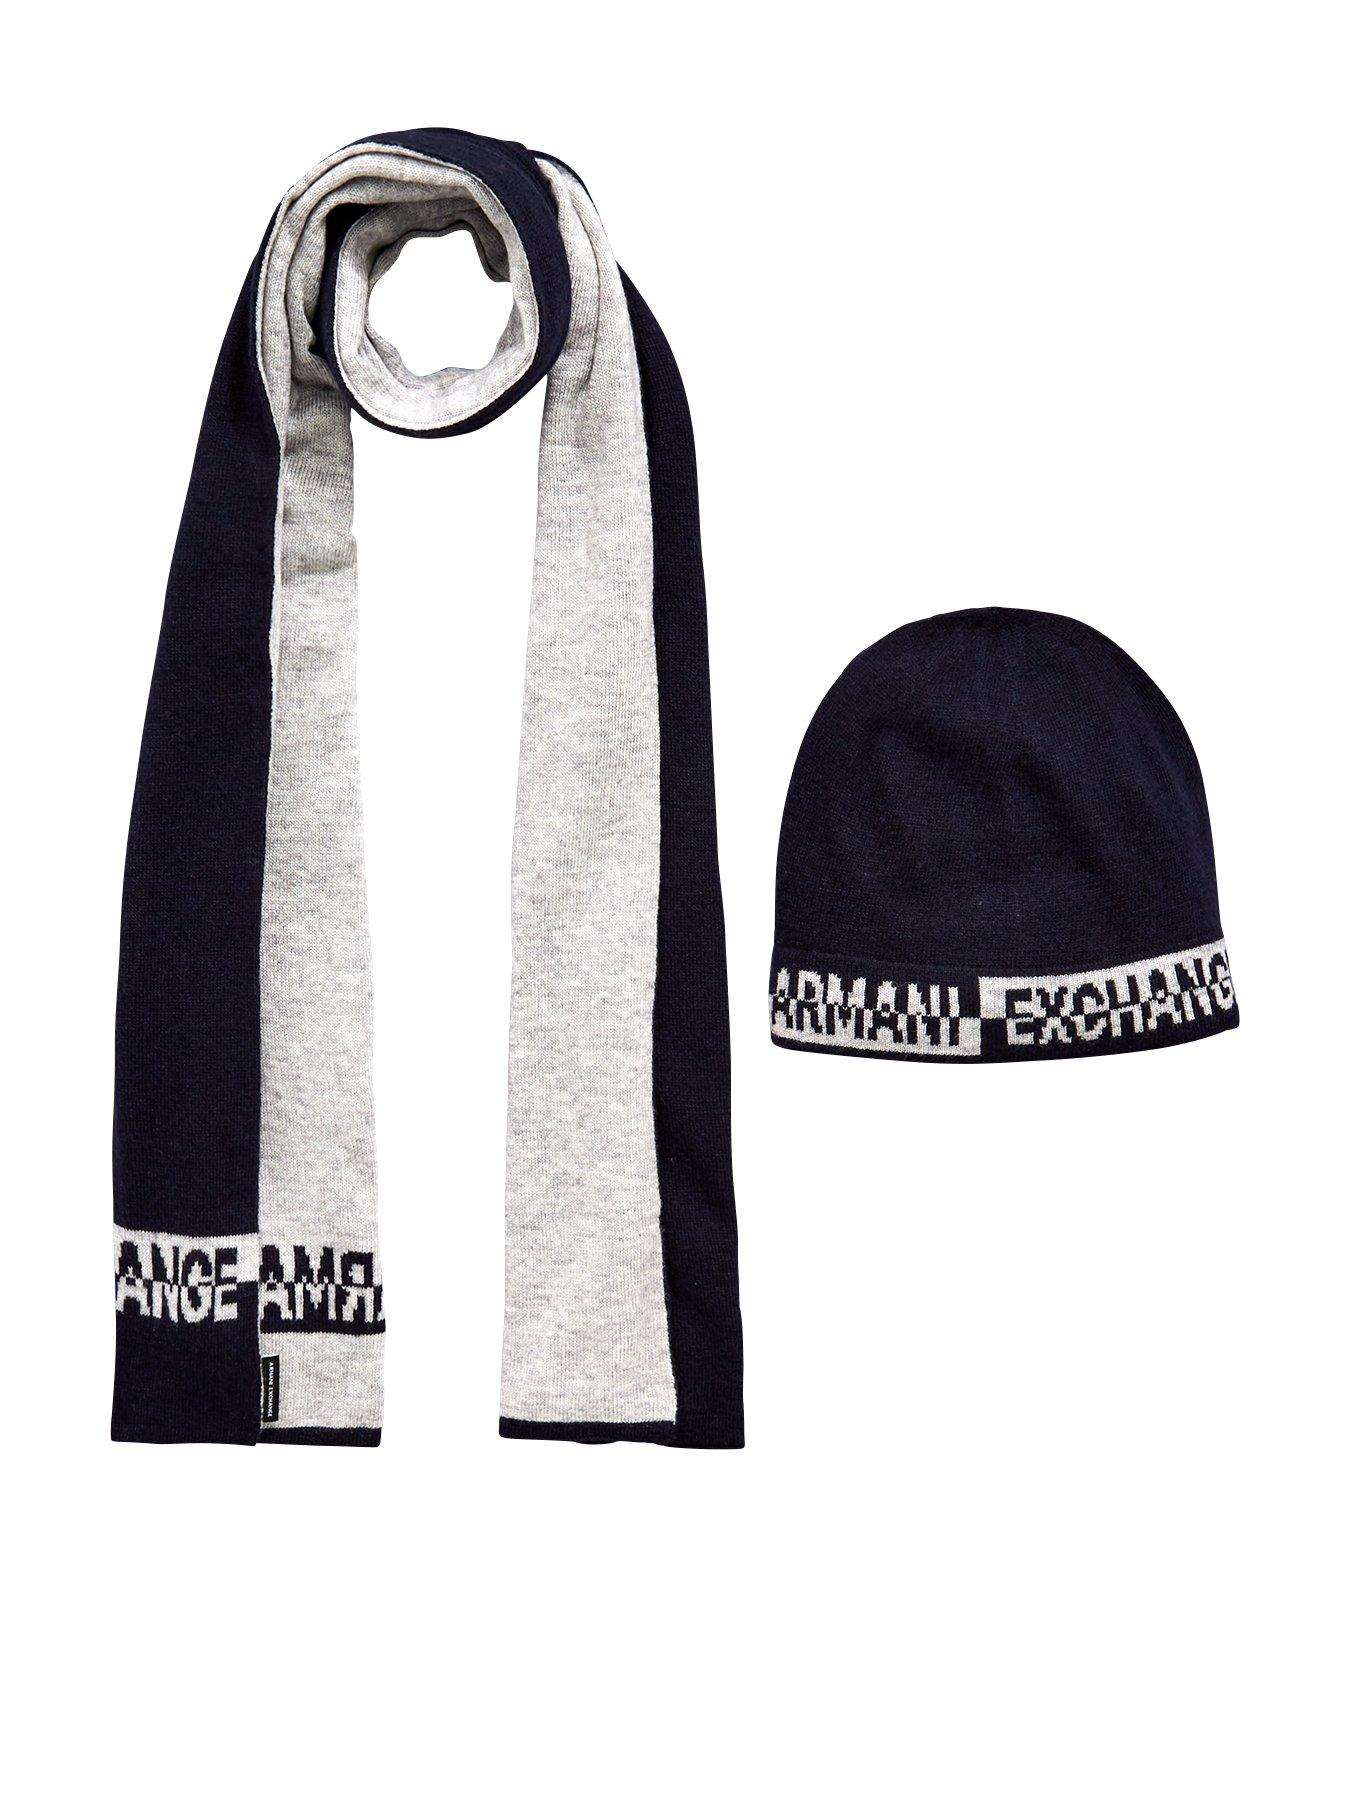 armani exchange hat and scarf set